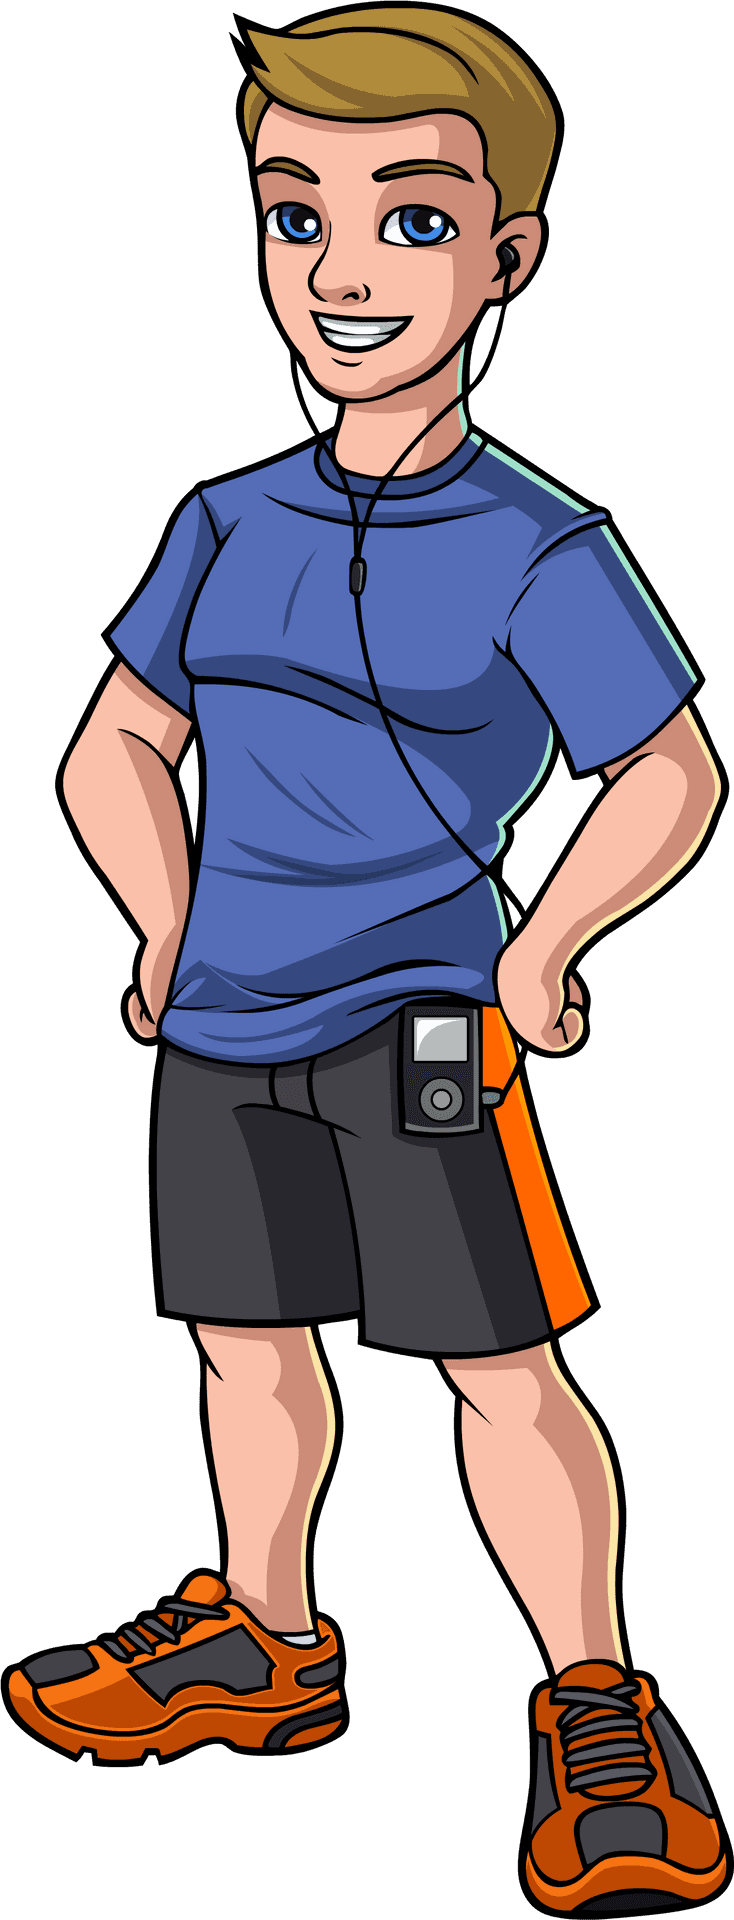 Confident Cartoon Boy Character PNG